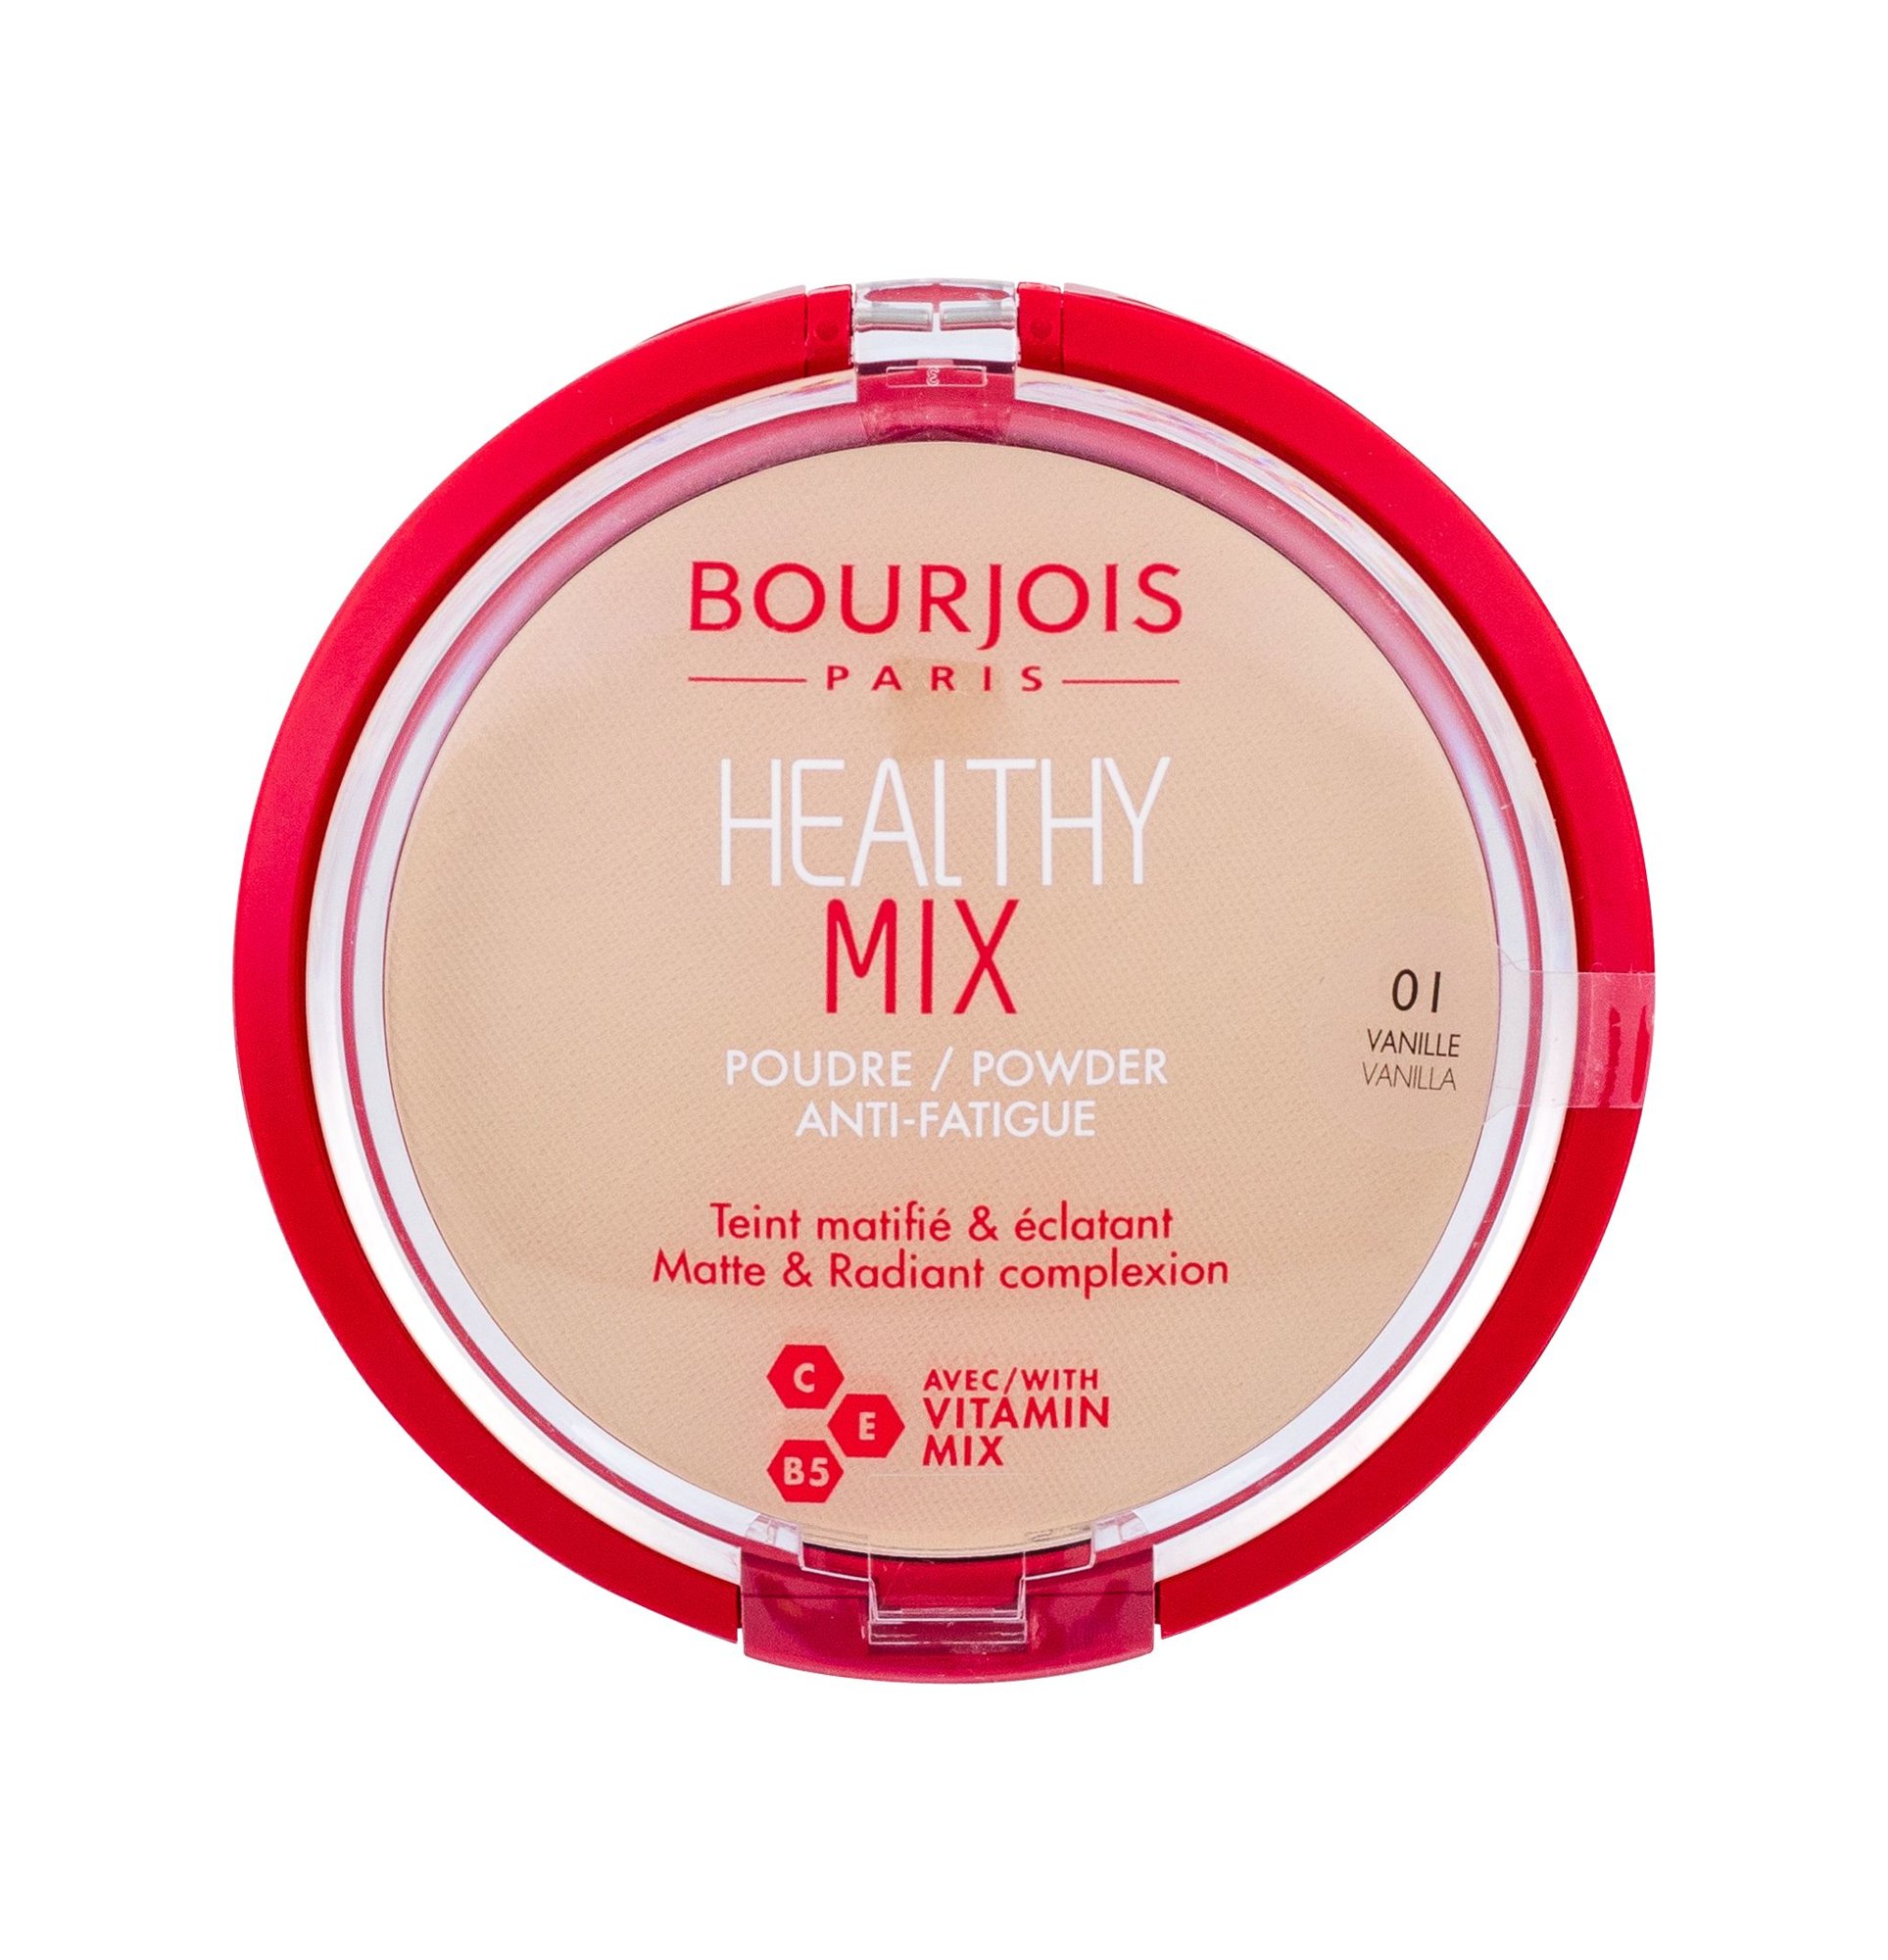 BOURJOIS Paris Healthy Mix Anti-Fatigue 11g sausa pudra